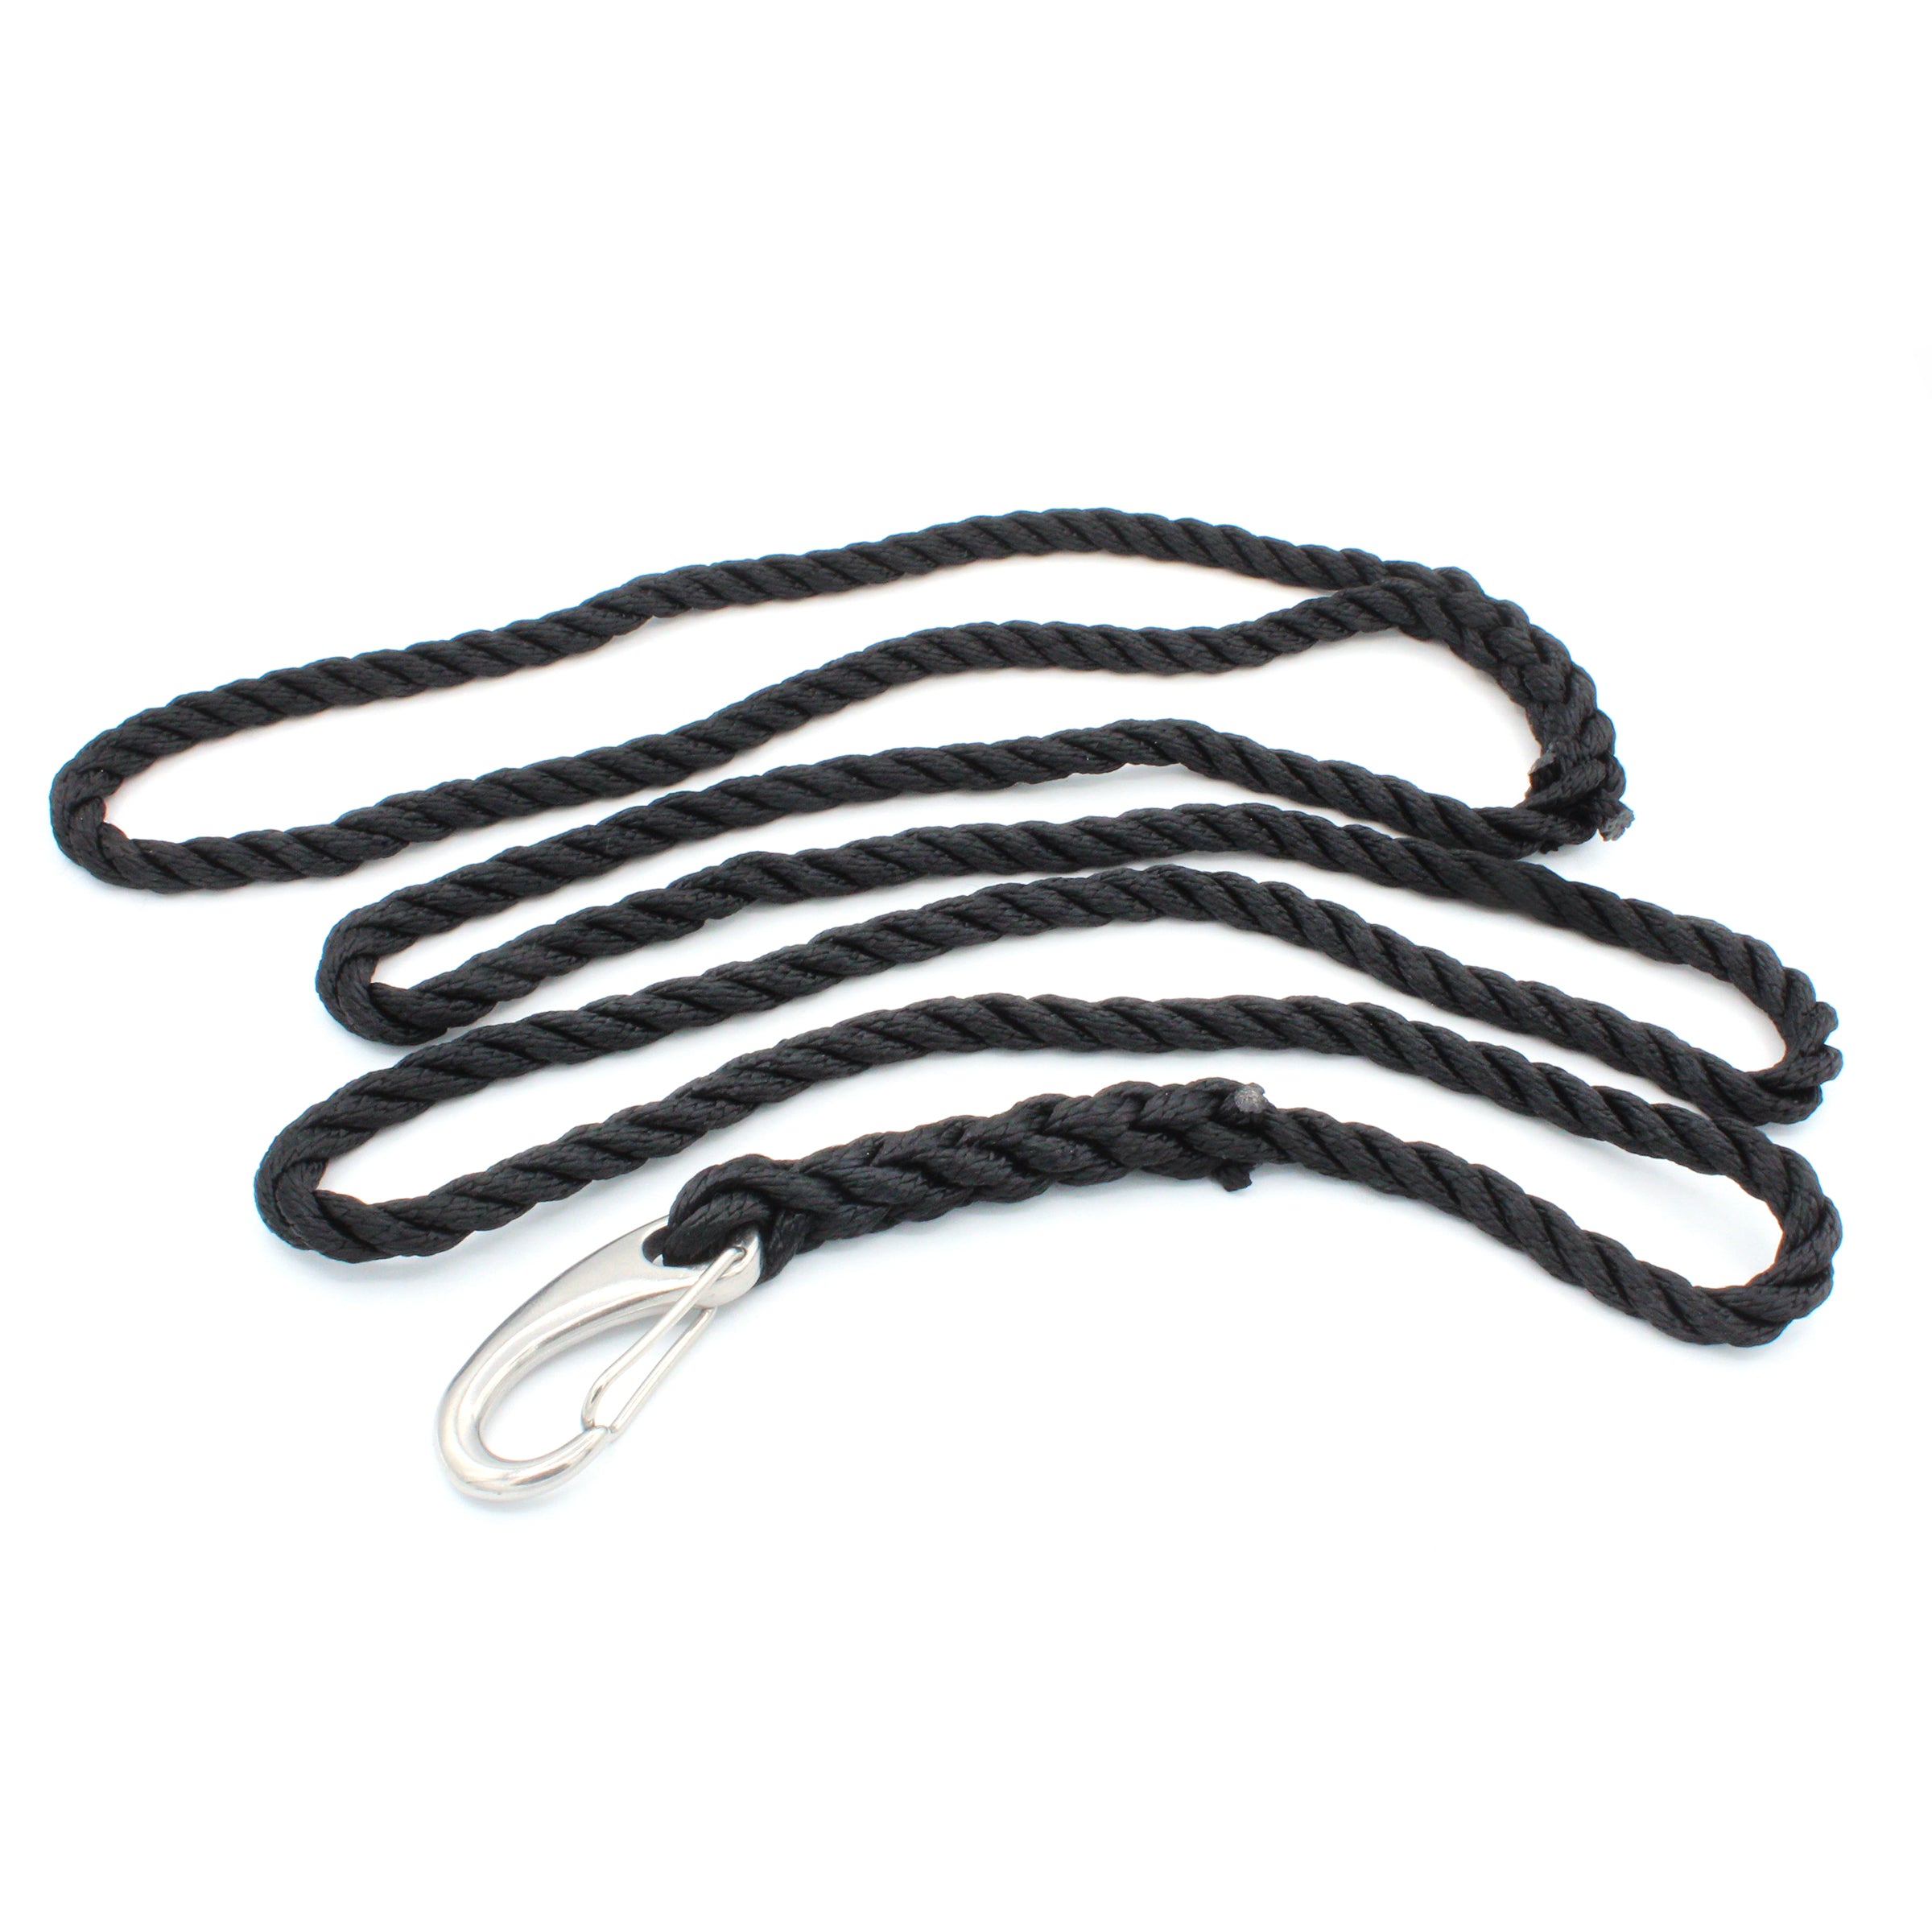 Calcutta rod leash